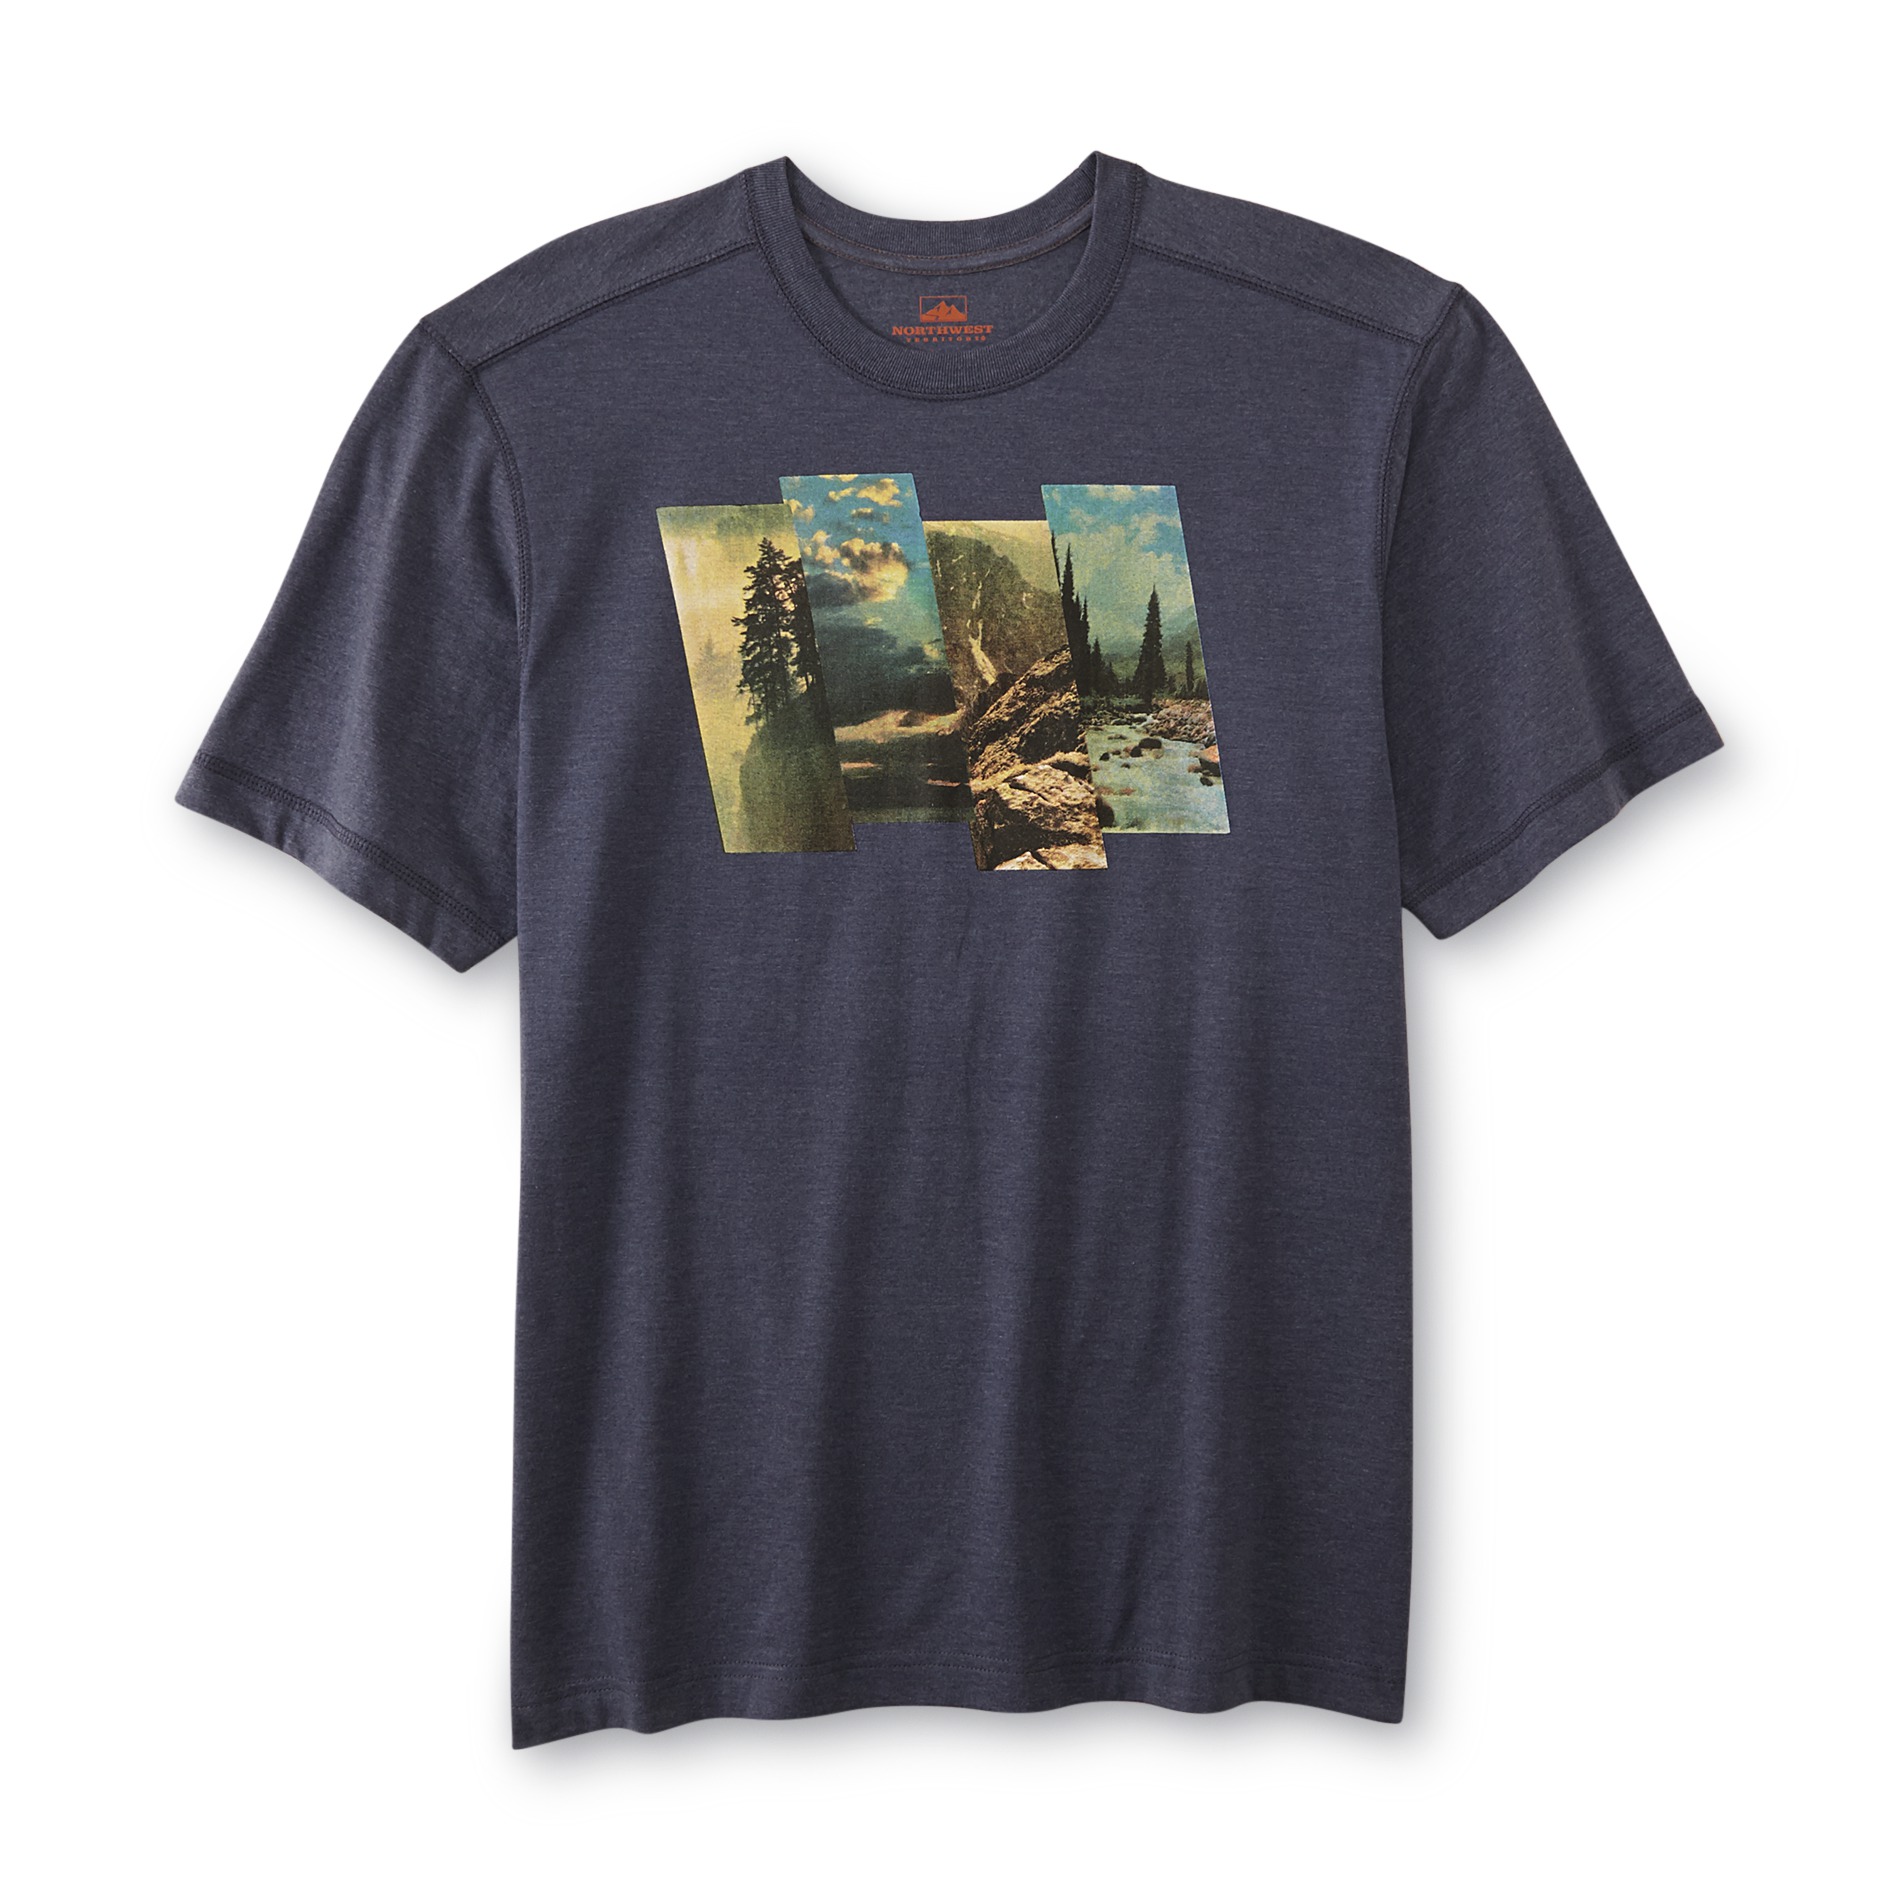 Northwest Territory Men's Big & Tall Graphic T-Shirt - Outdoors